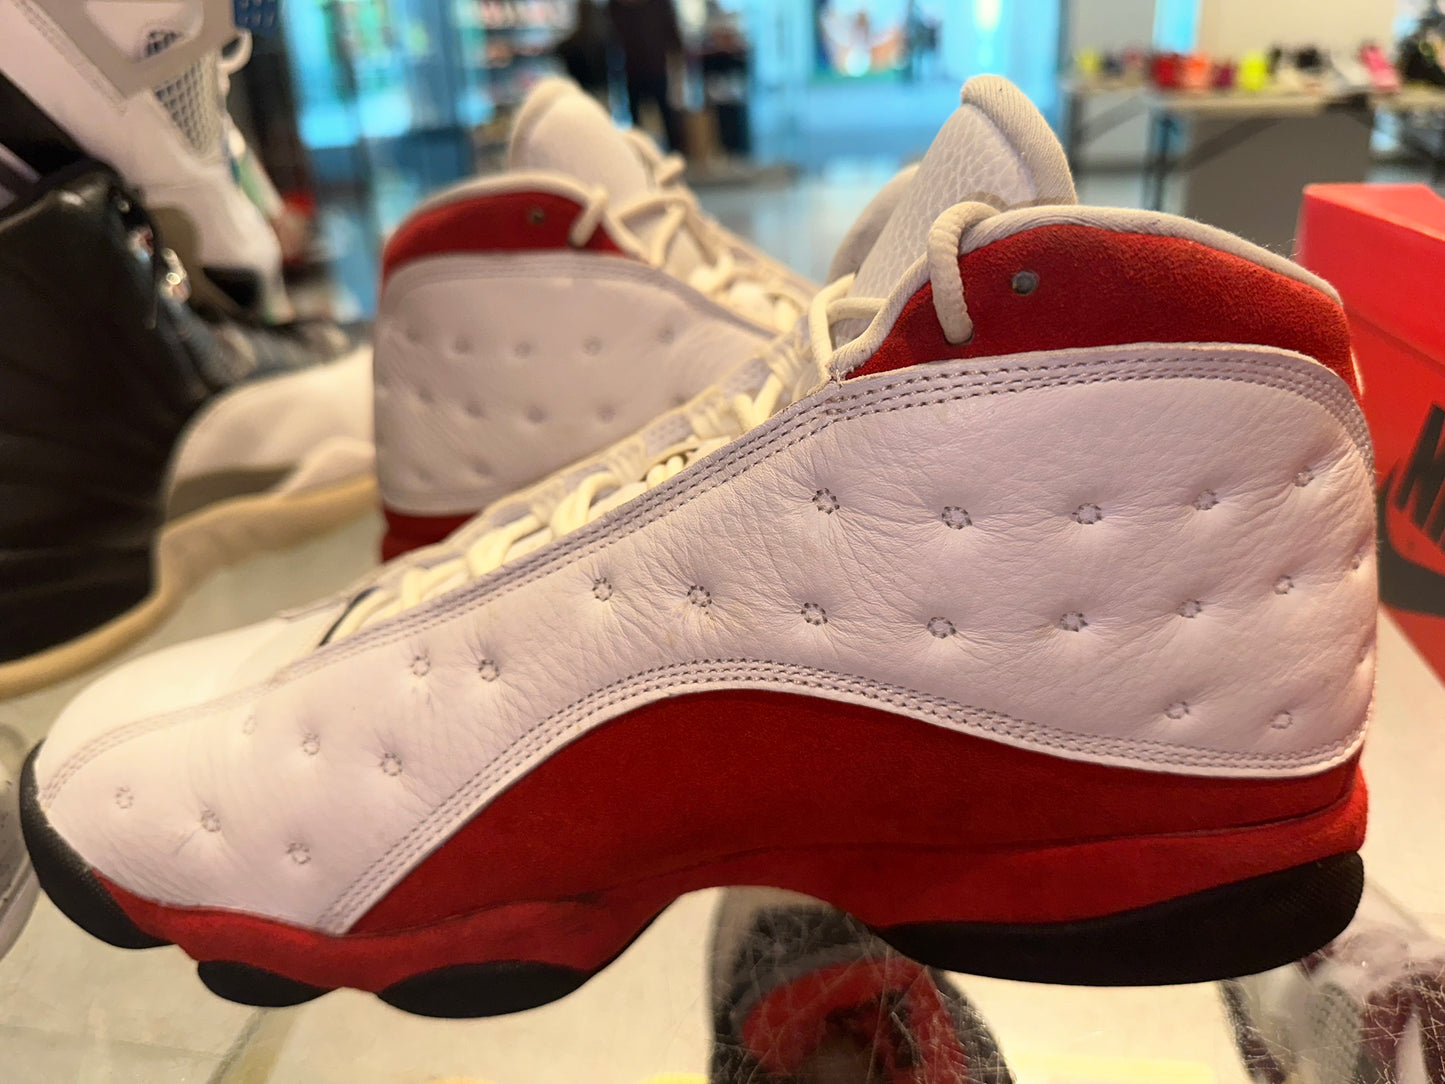 Size 10.5 Air Jordan 13 “Cherry” (Mall)